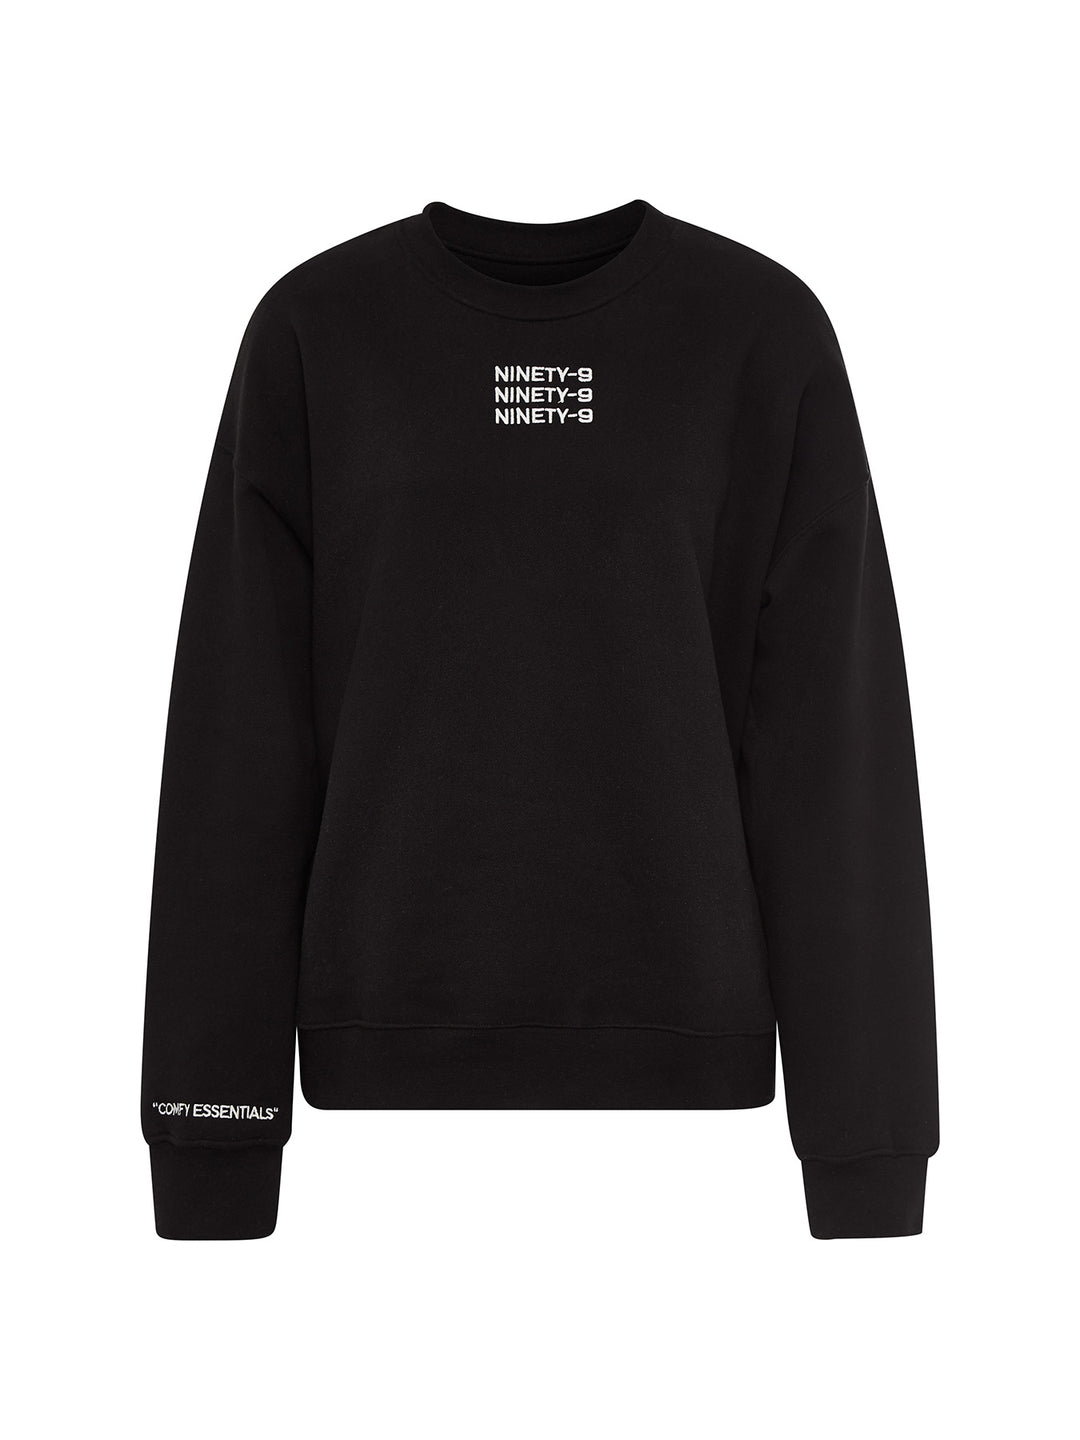 CHARLOTTE - Sweatshirt, Black